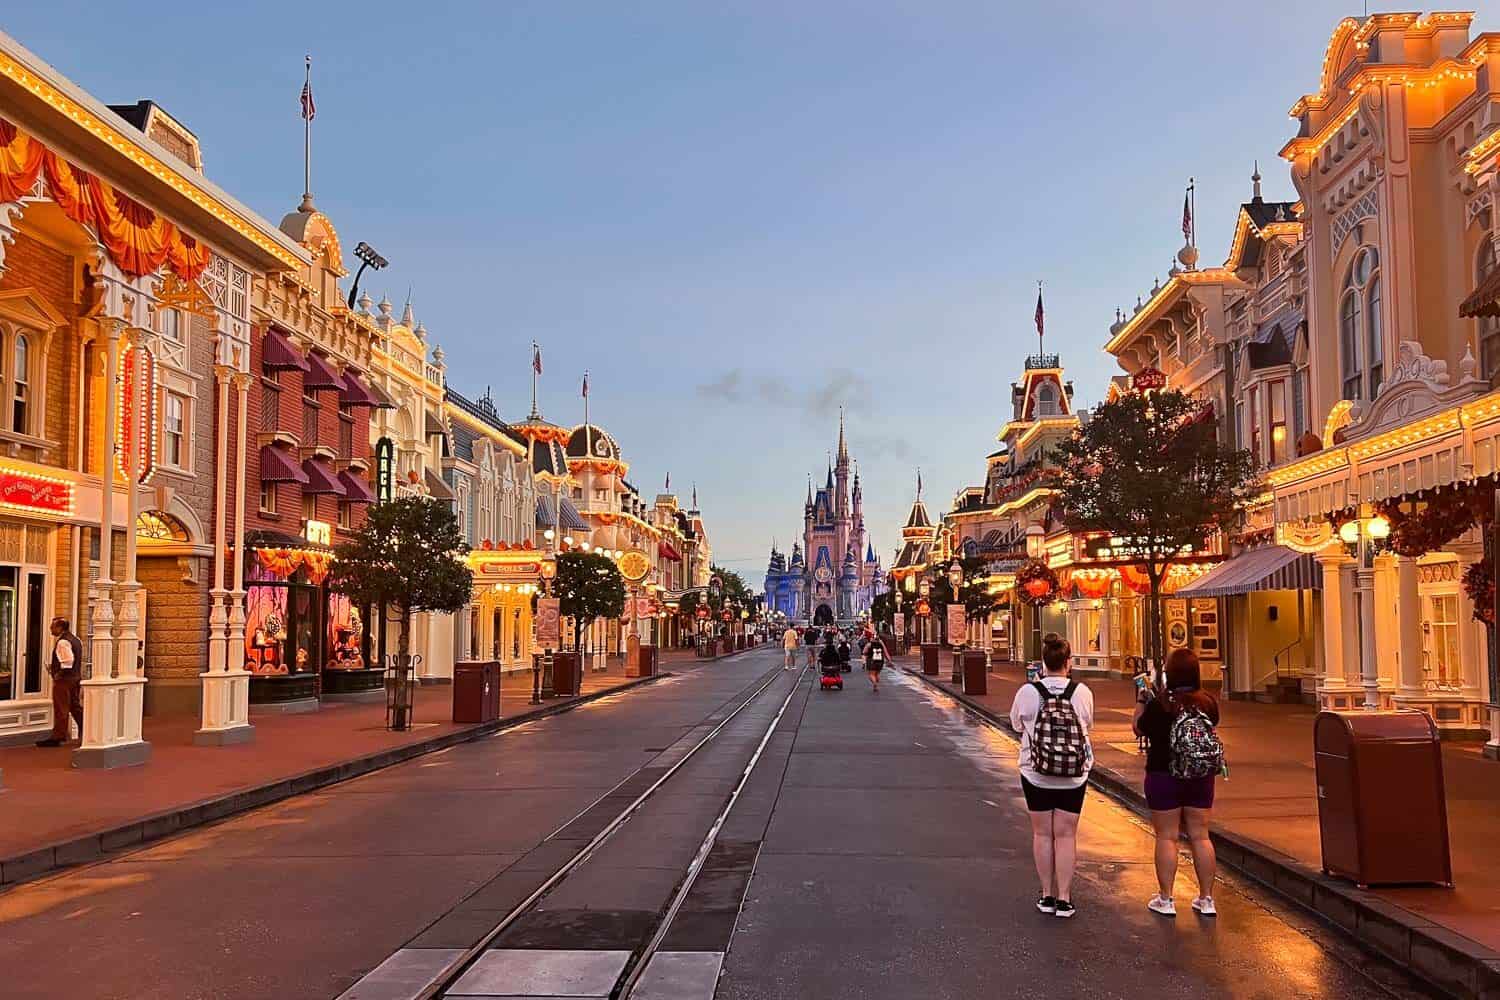 Nearly empty Main Street during Early Entry hours, Magic Kingdom, Disney World